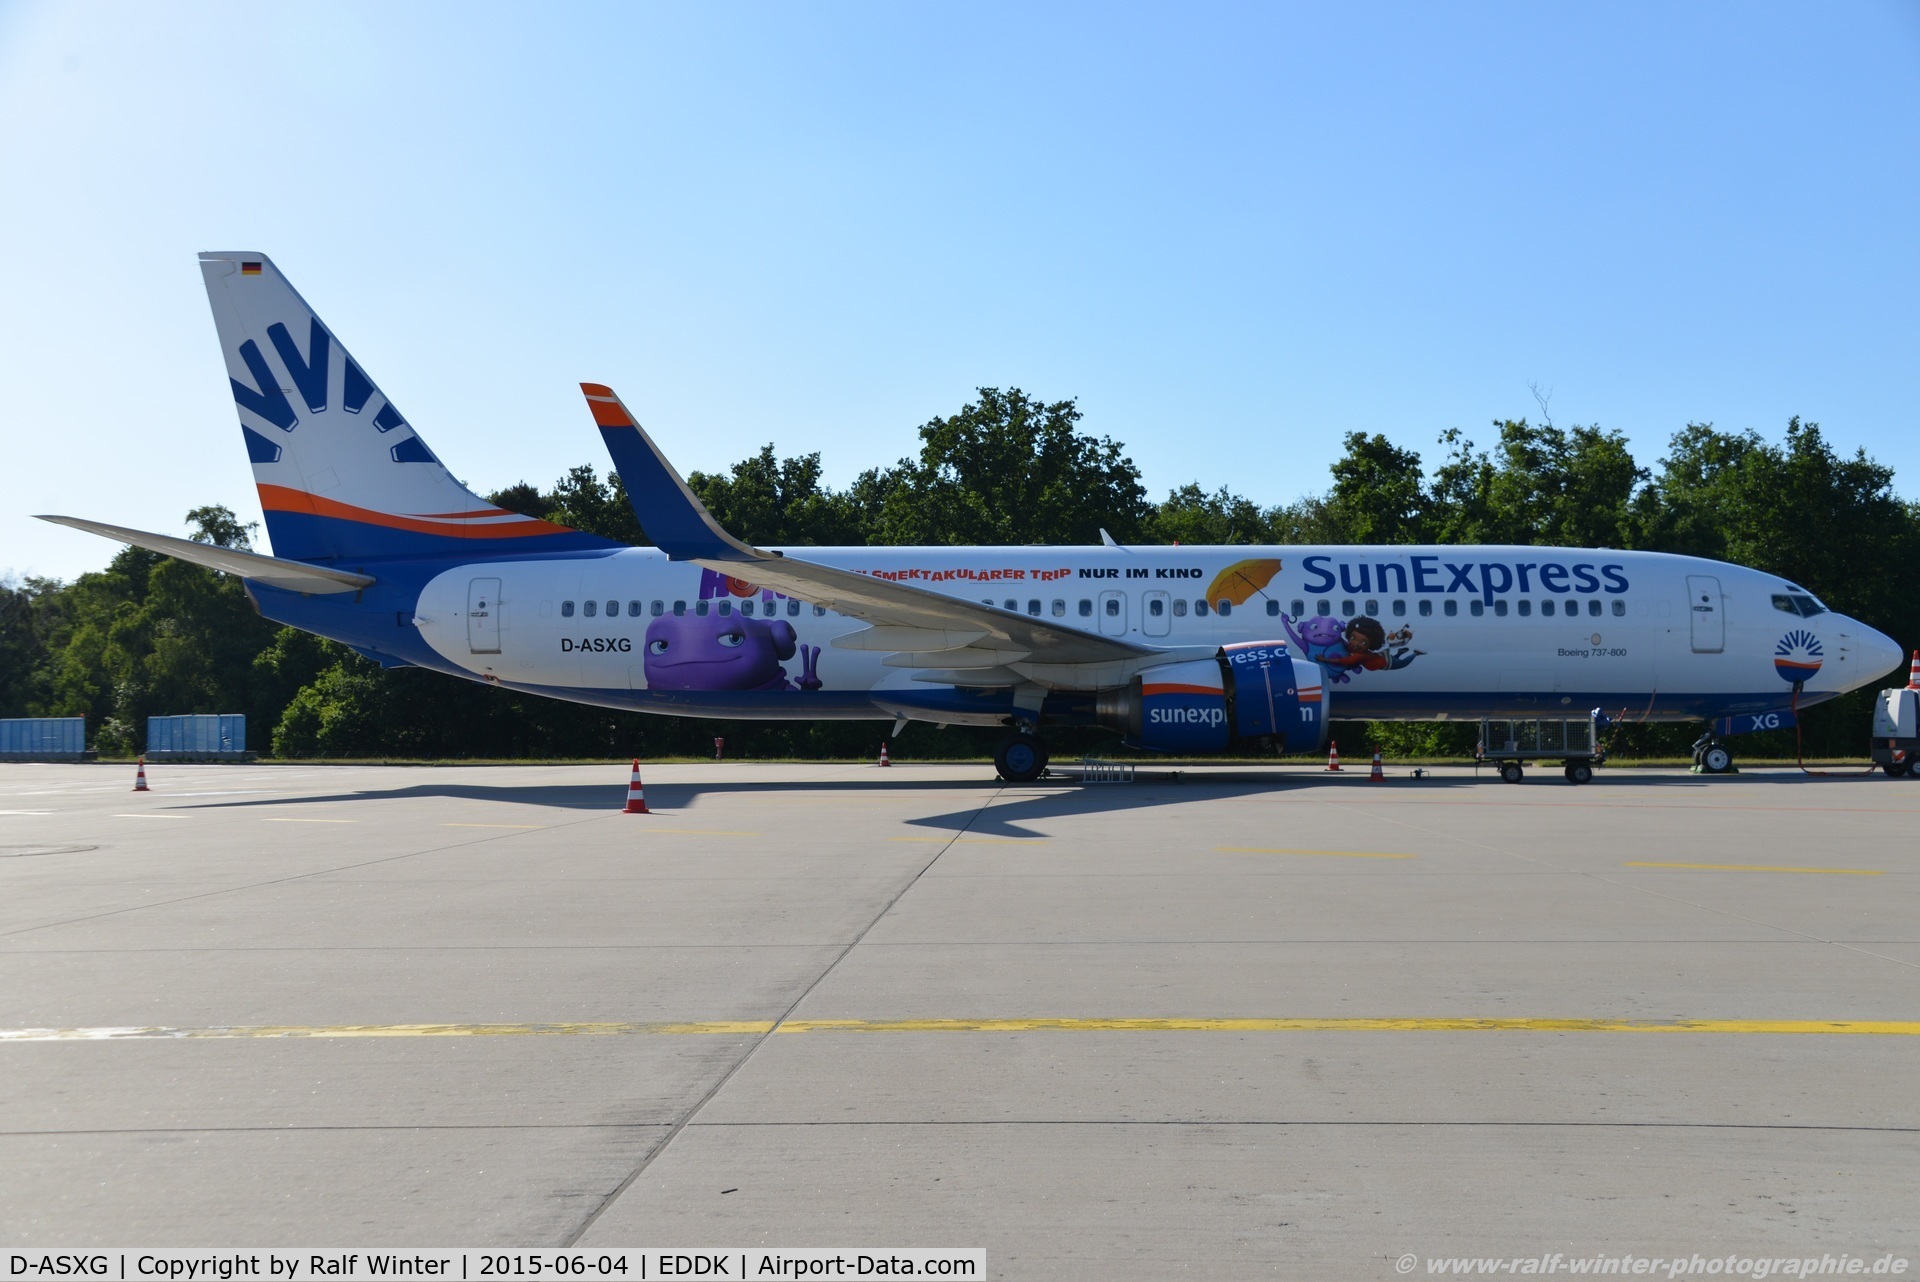 D-ASXG, 2002 Boeing 737-8CX C/N 32366, Boeing 737-8CX(W) - XG SXD SunExpress Germany 'Home' livery - 32366 - D-ASXG - 04.06.2015 - CGN